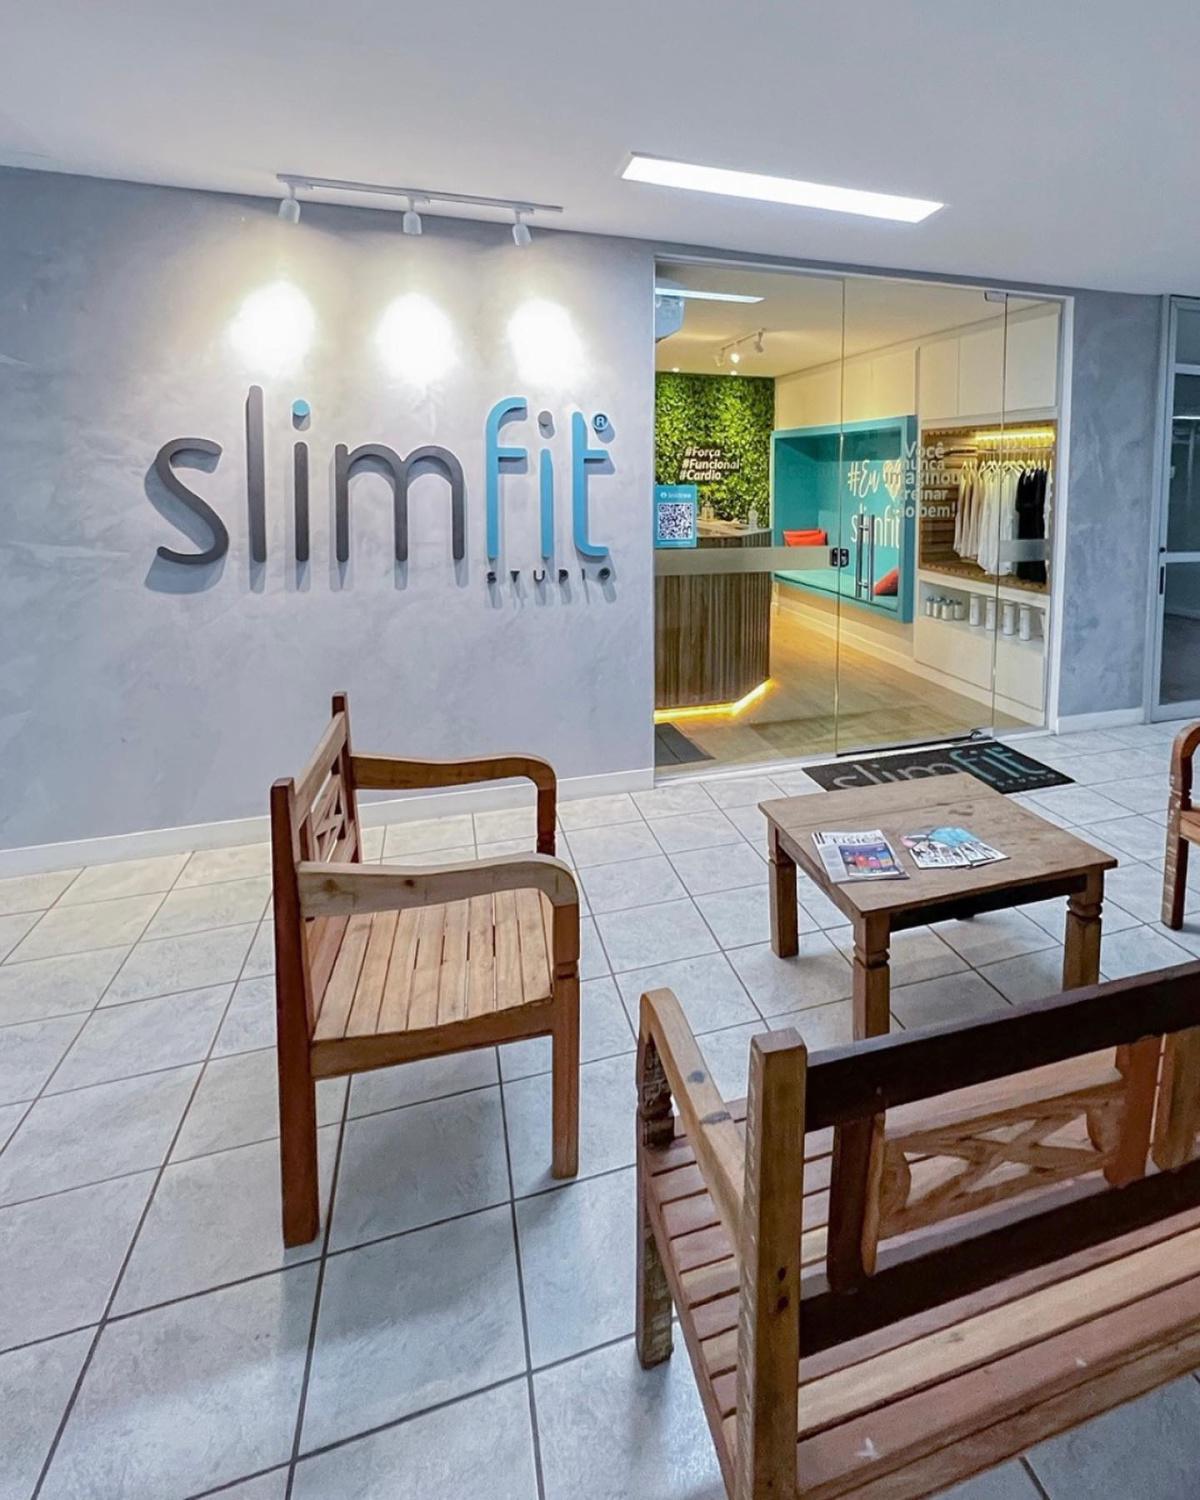 SlimFit Studio 